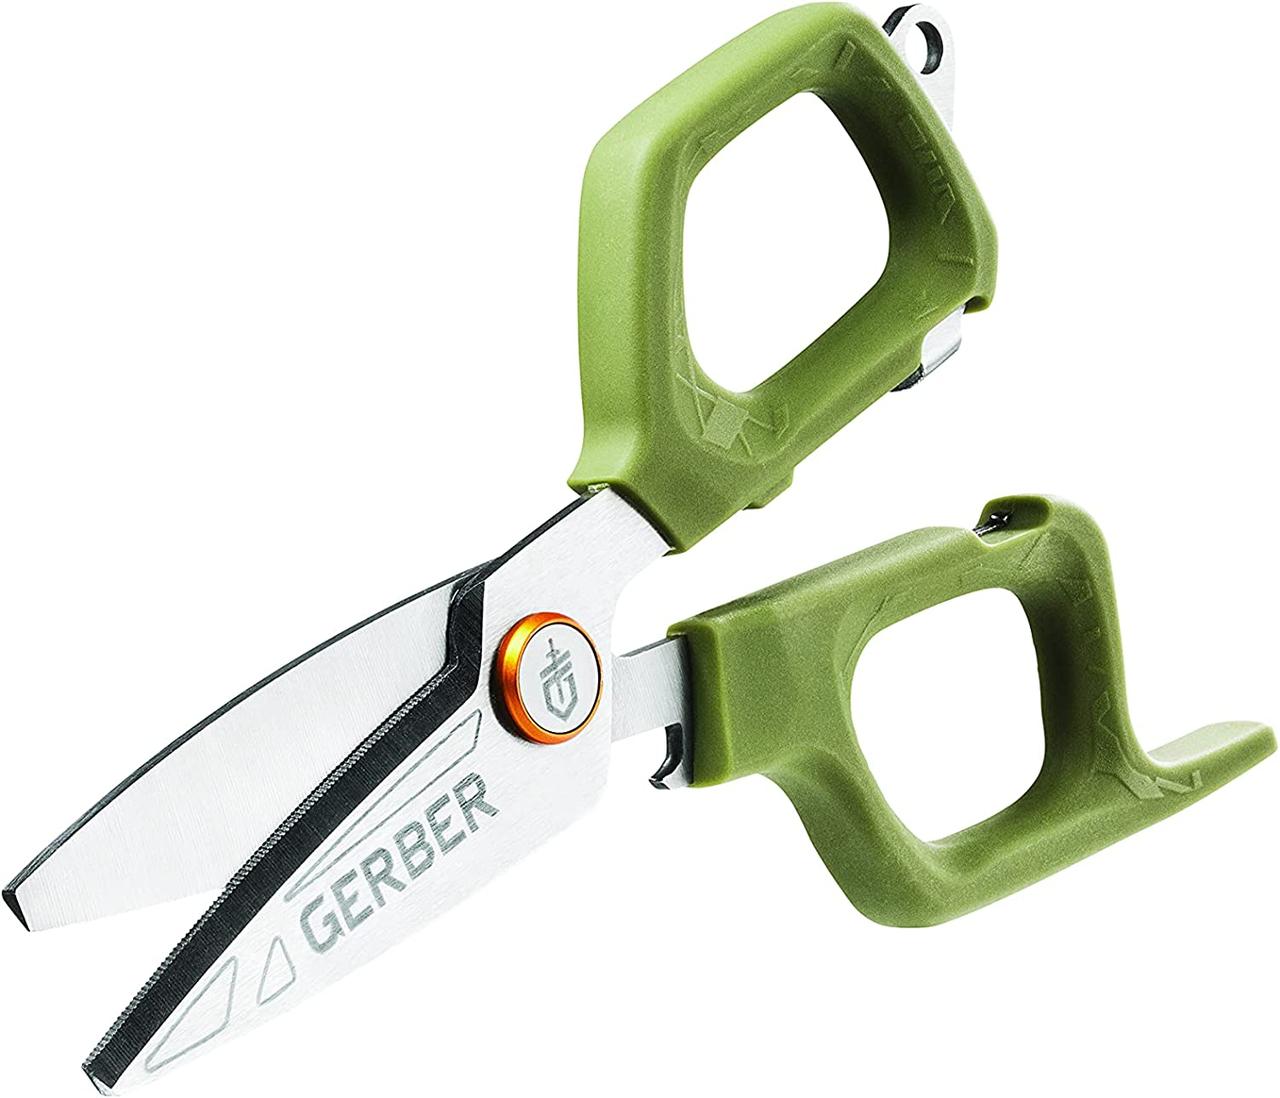 Gerber Neat Freak Cutters - Best Braid Scissors